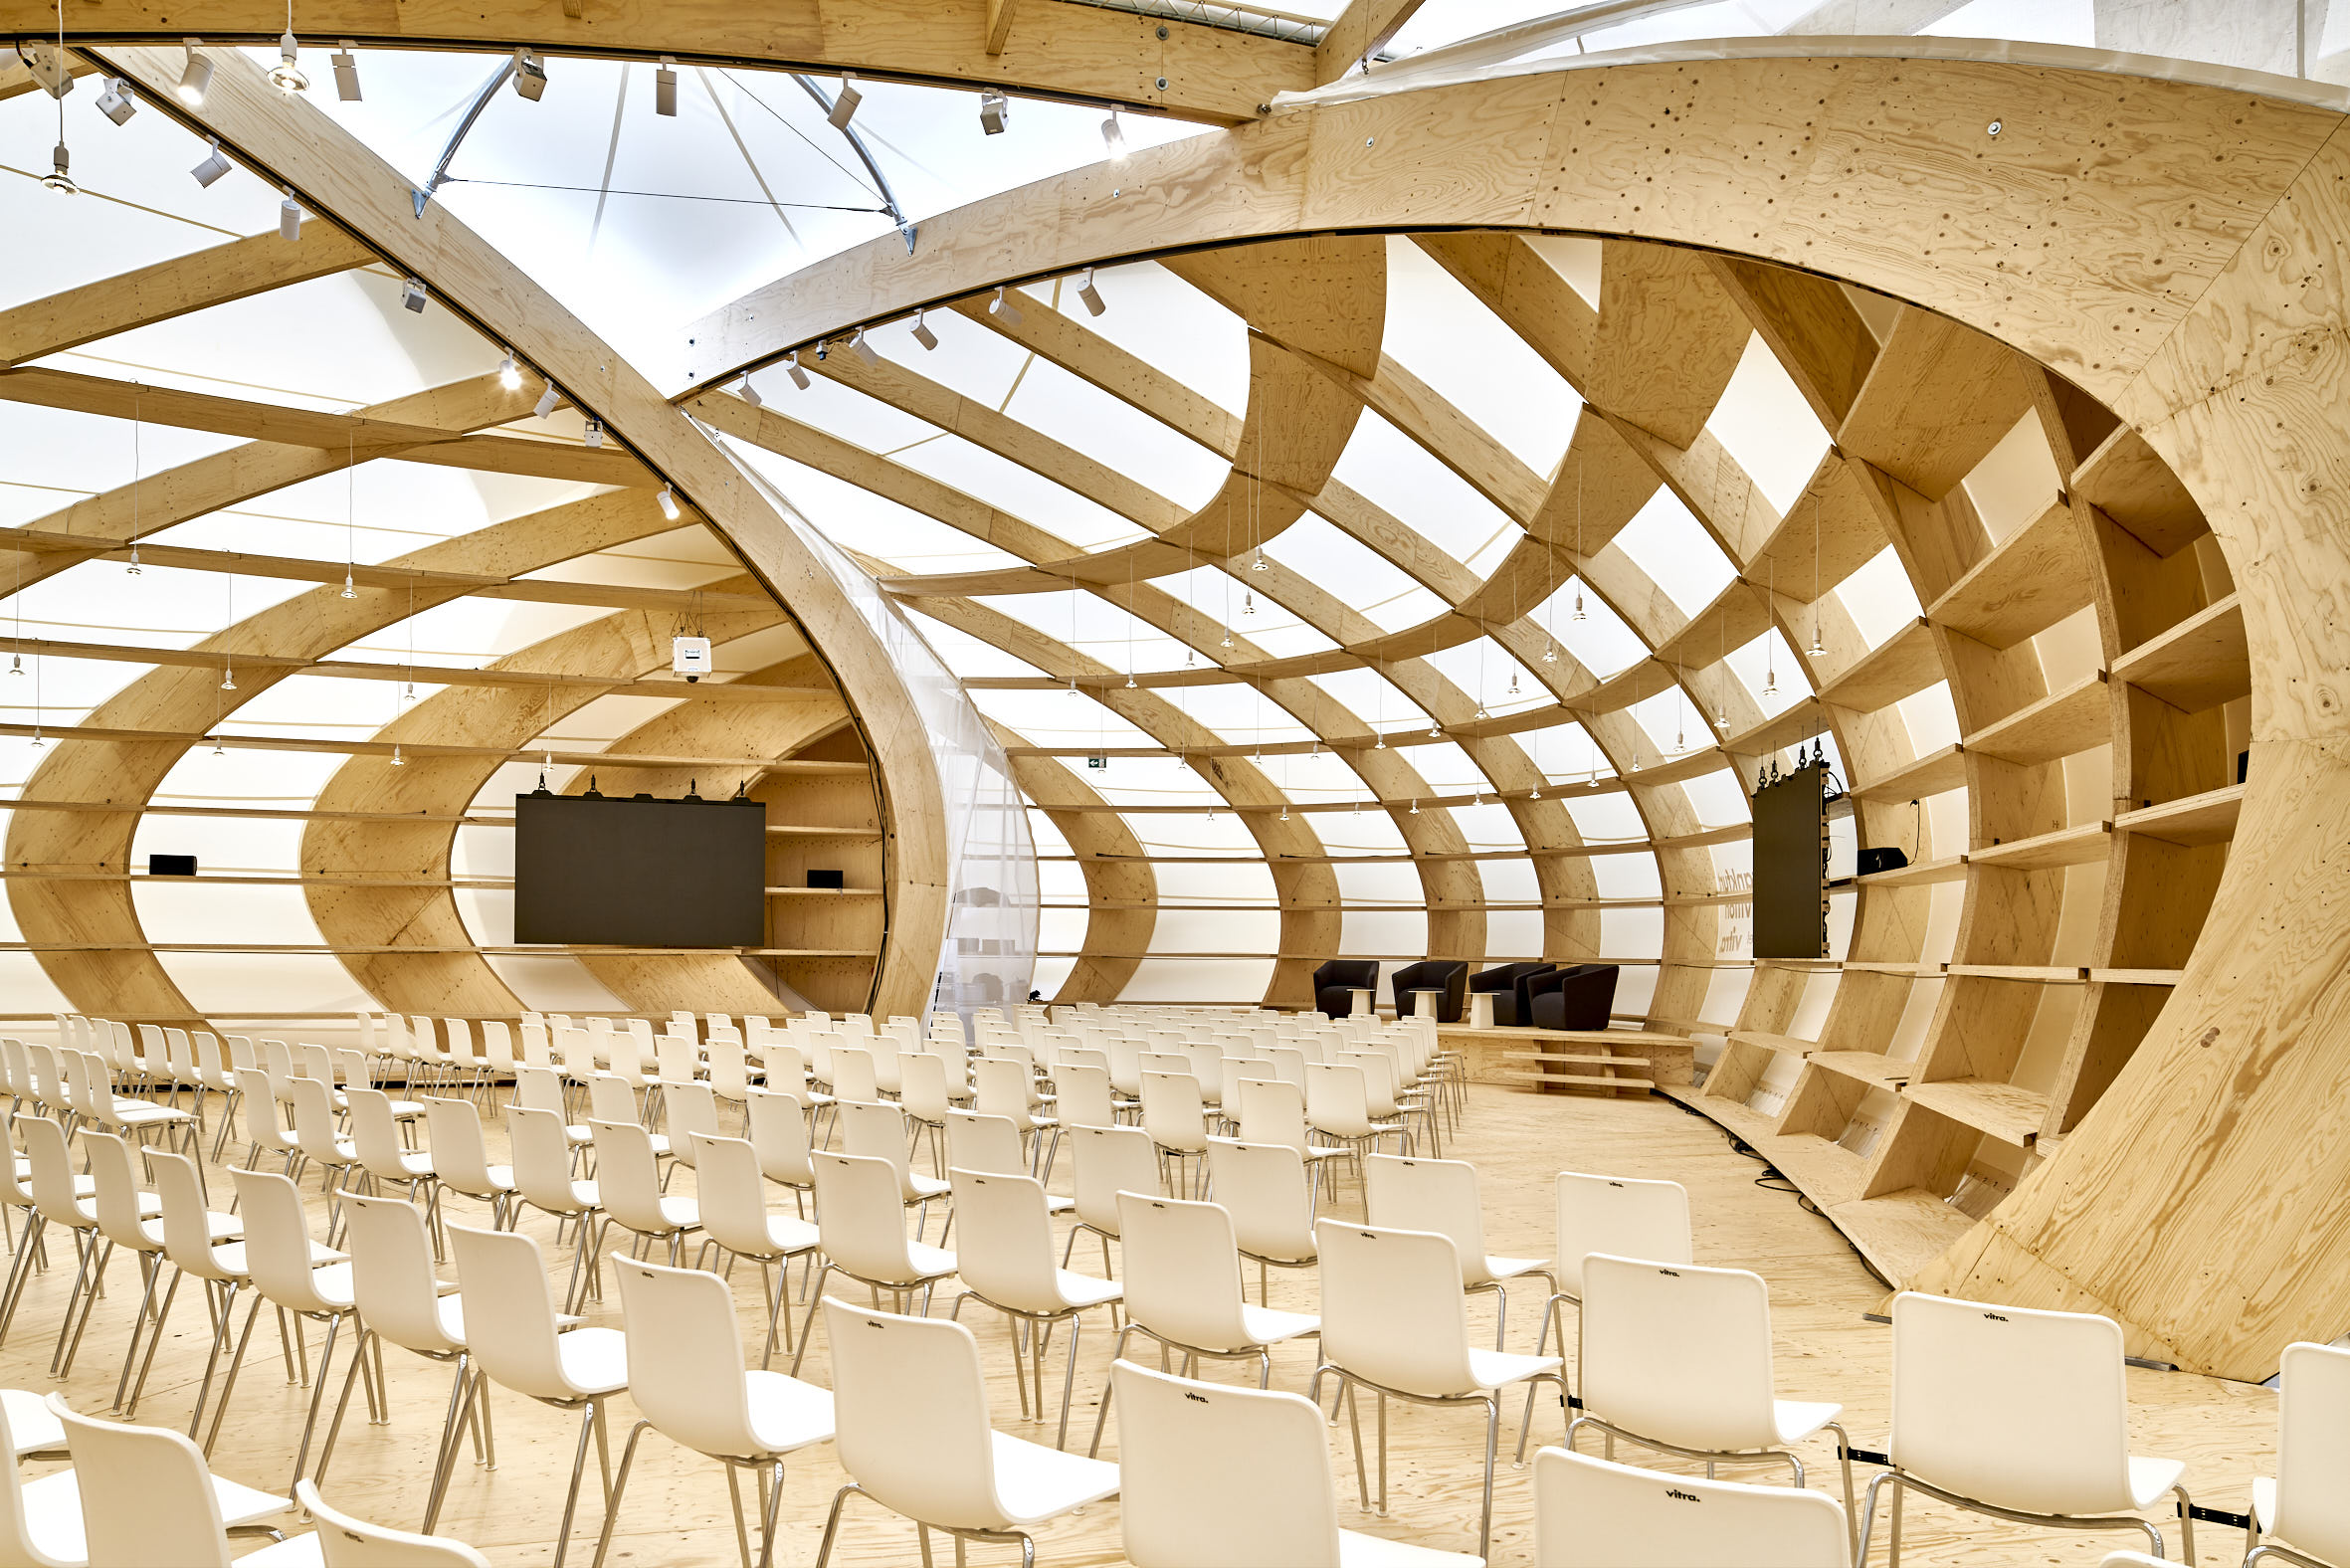 Completion of Frankfurt Pavilion: A unique structure for the Frankfurt Book Fair